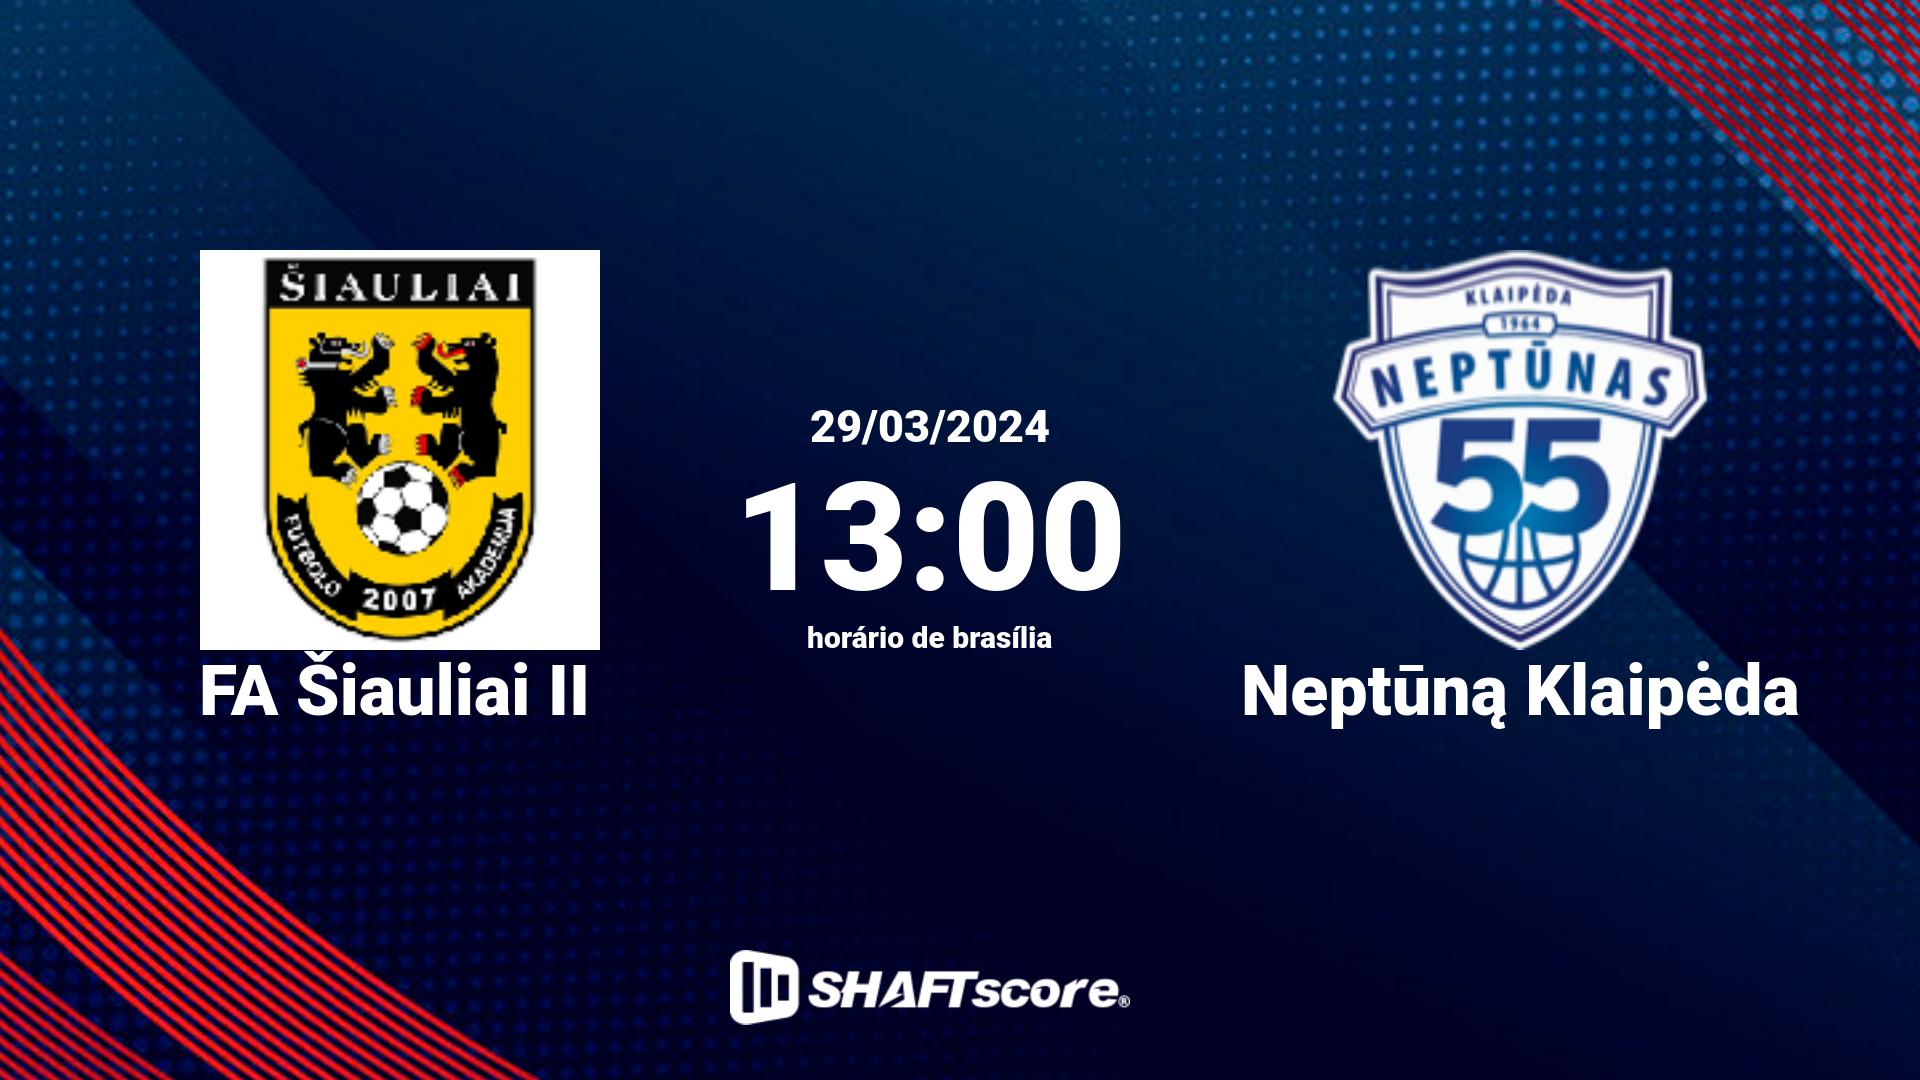 Estatísticas do jogo FA Šiauliai II vs Neptūną Klaipėda 29.03 13:00